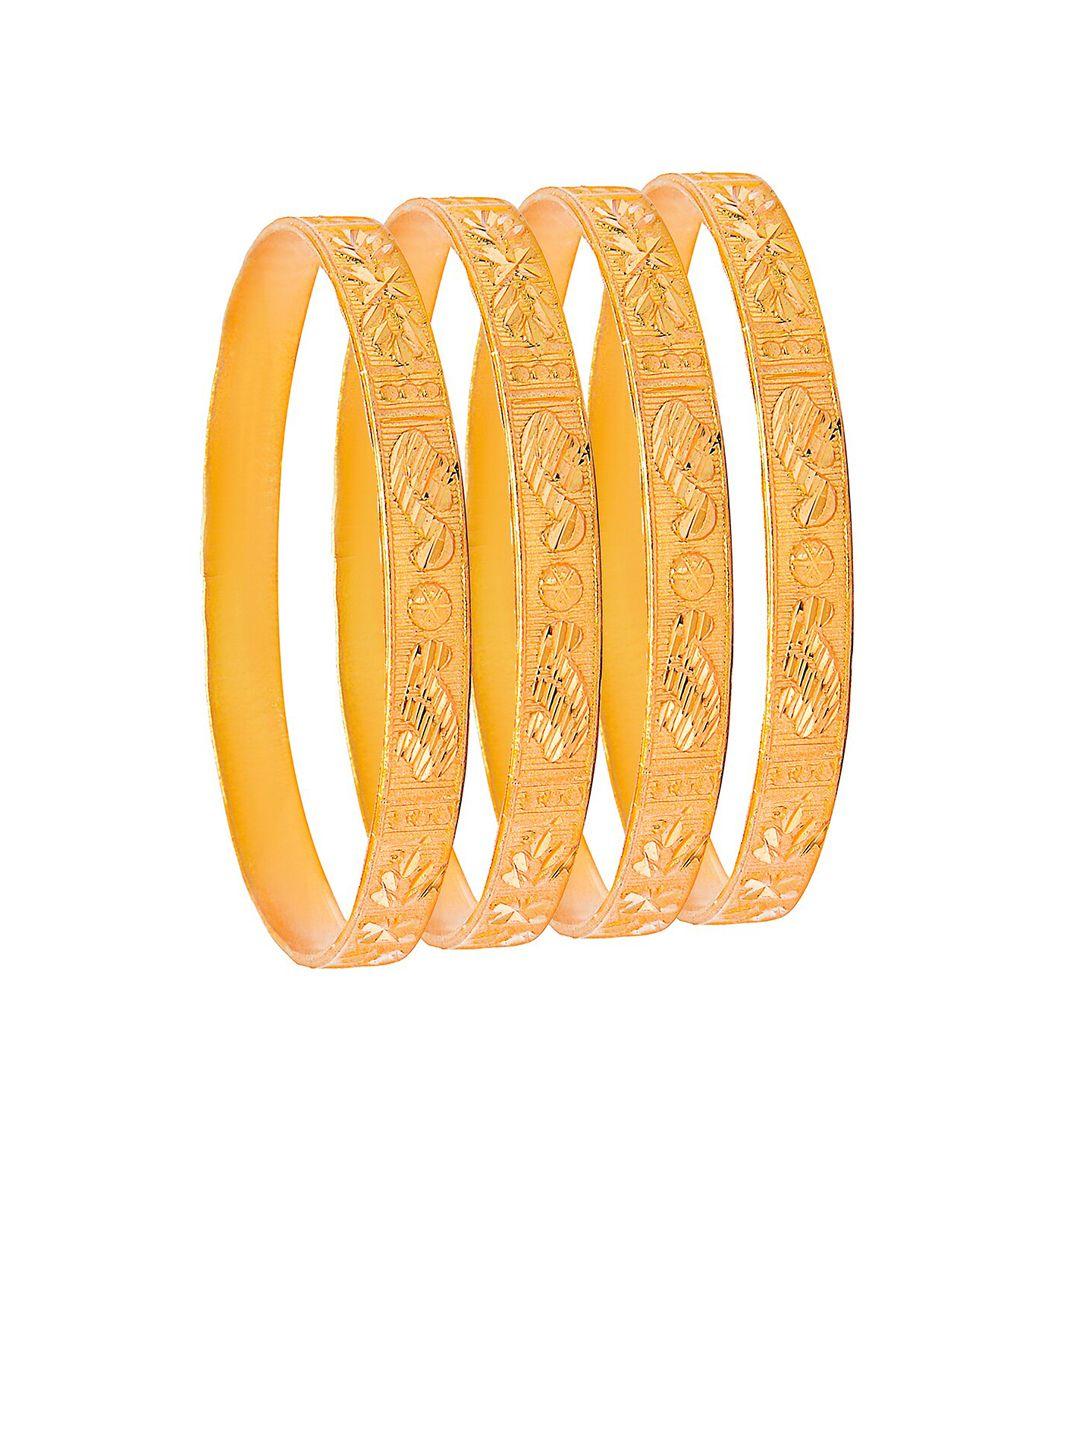 shining jewel - by shivansh set of 4 gold-plated traditional bangles